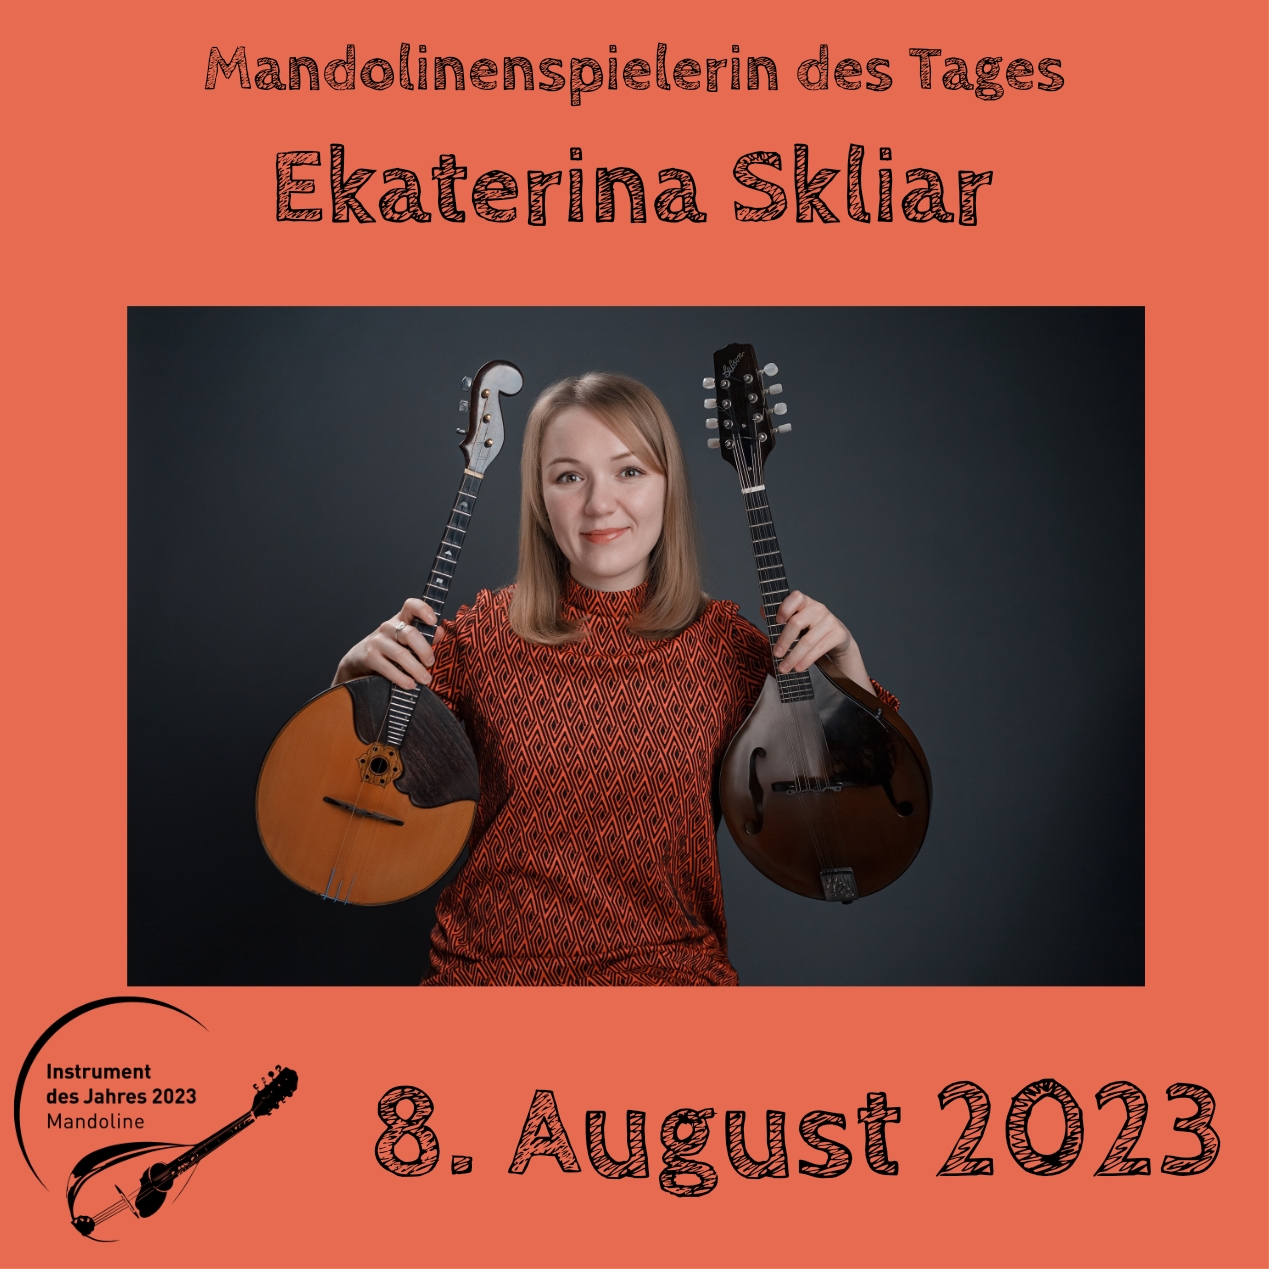 8. August  - Ekaterina Skliar Mandoline Instrument des Jahres 2023 Mandolinenspieler Mandolinenspielerin des Tages